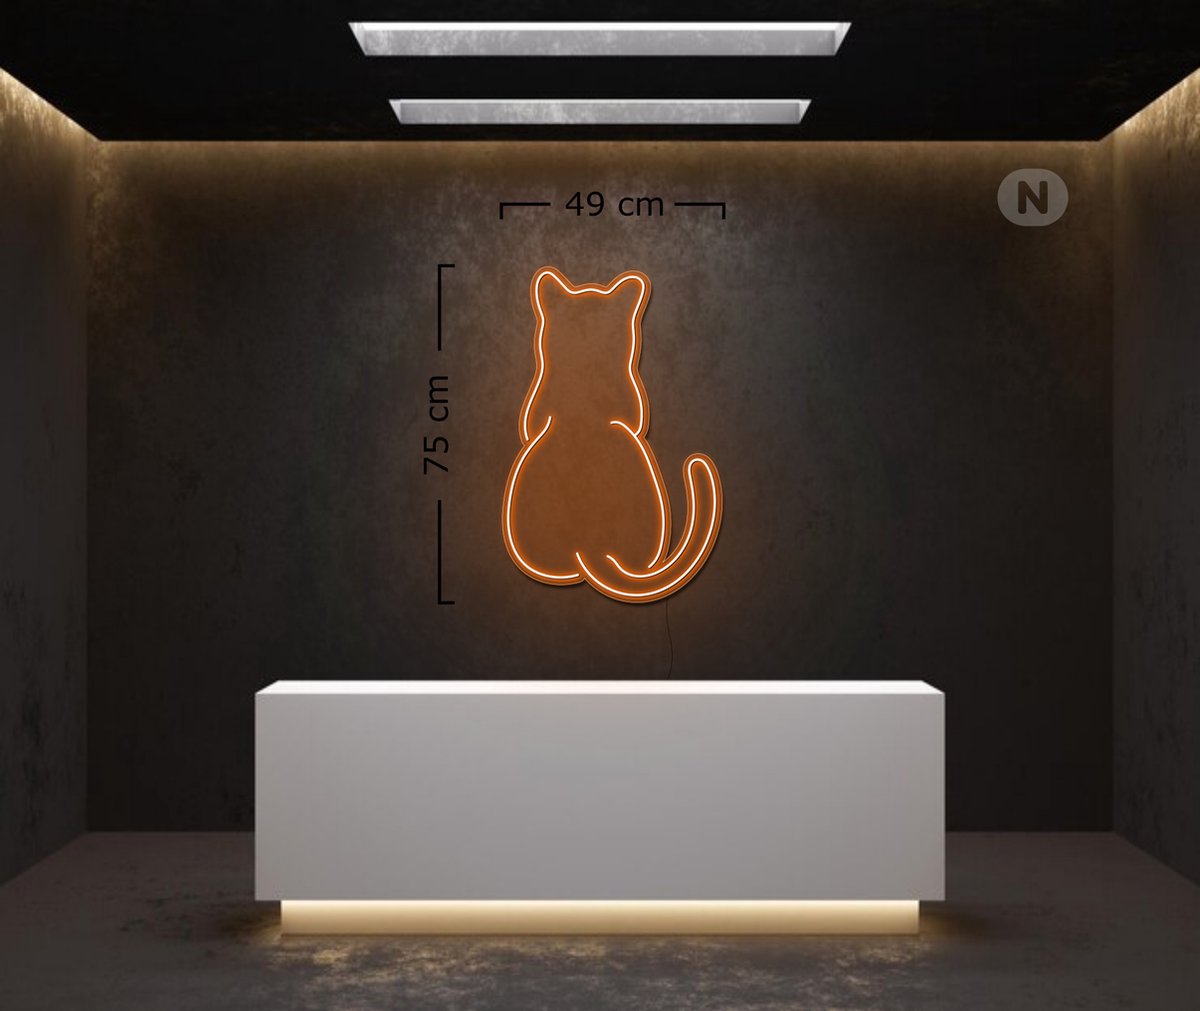 Led Neonbord - Led Neonverlichting - Kat - Oranje - 75cm * 49cm